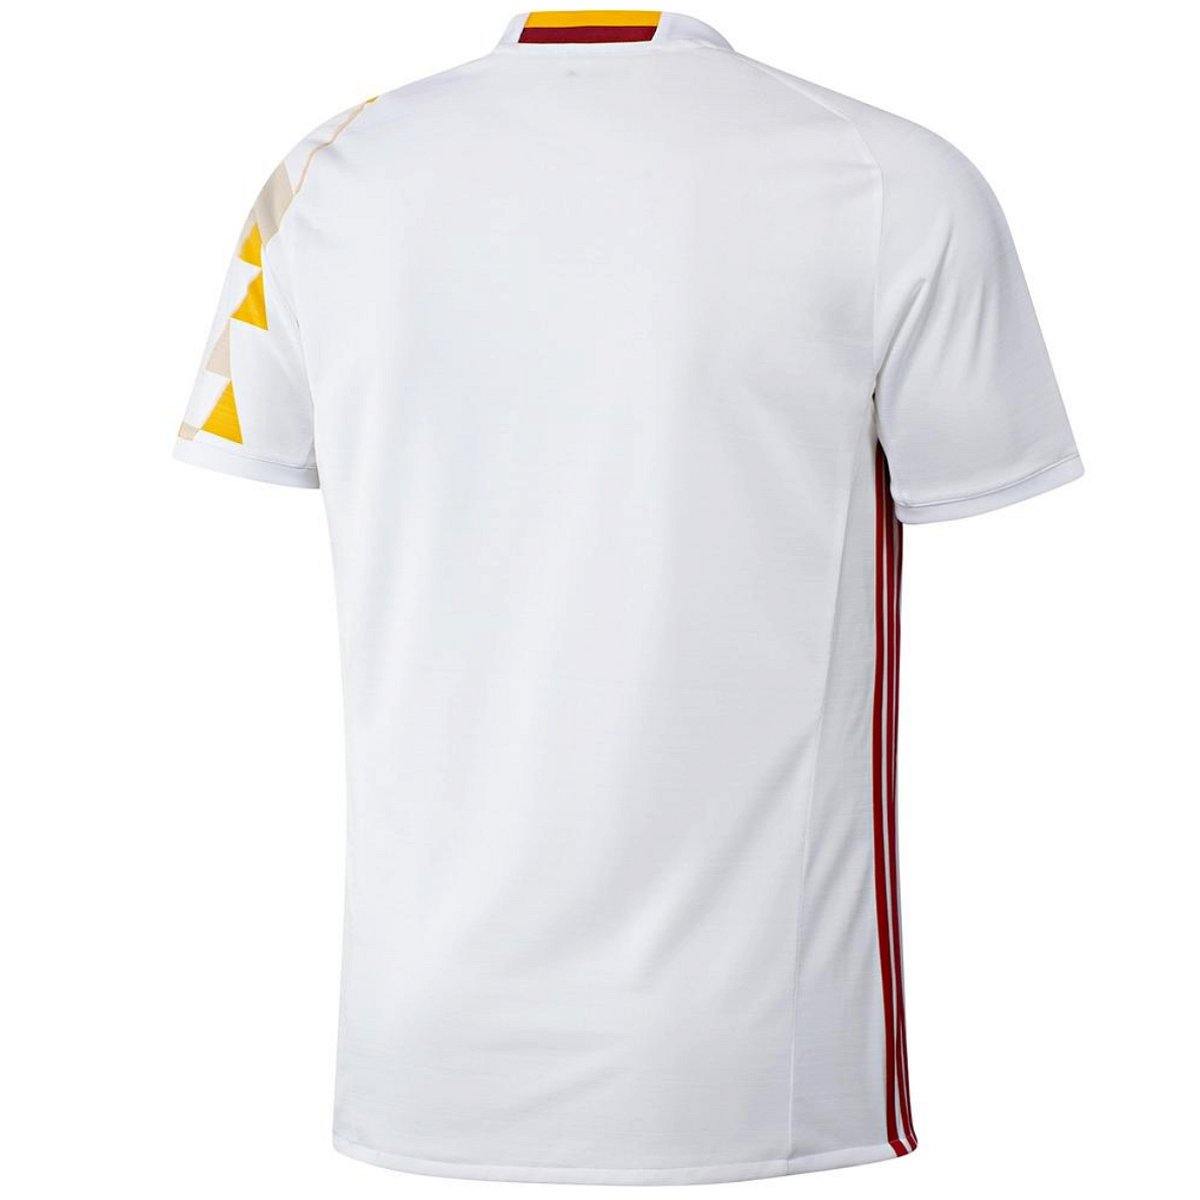 Spain national team Away jersey 2016/17 - Adidas SoccerTracksuits.com